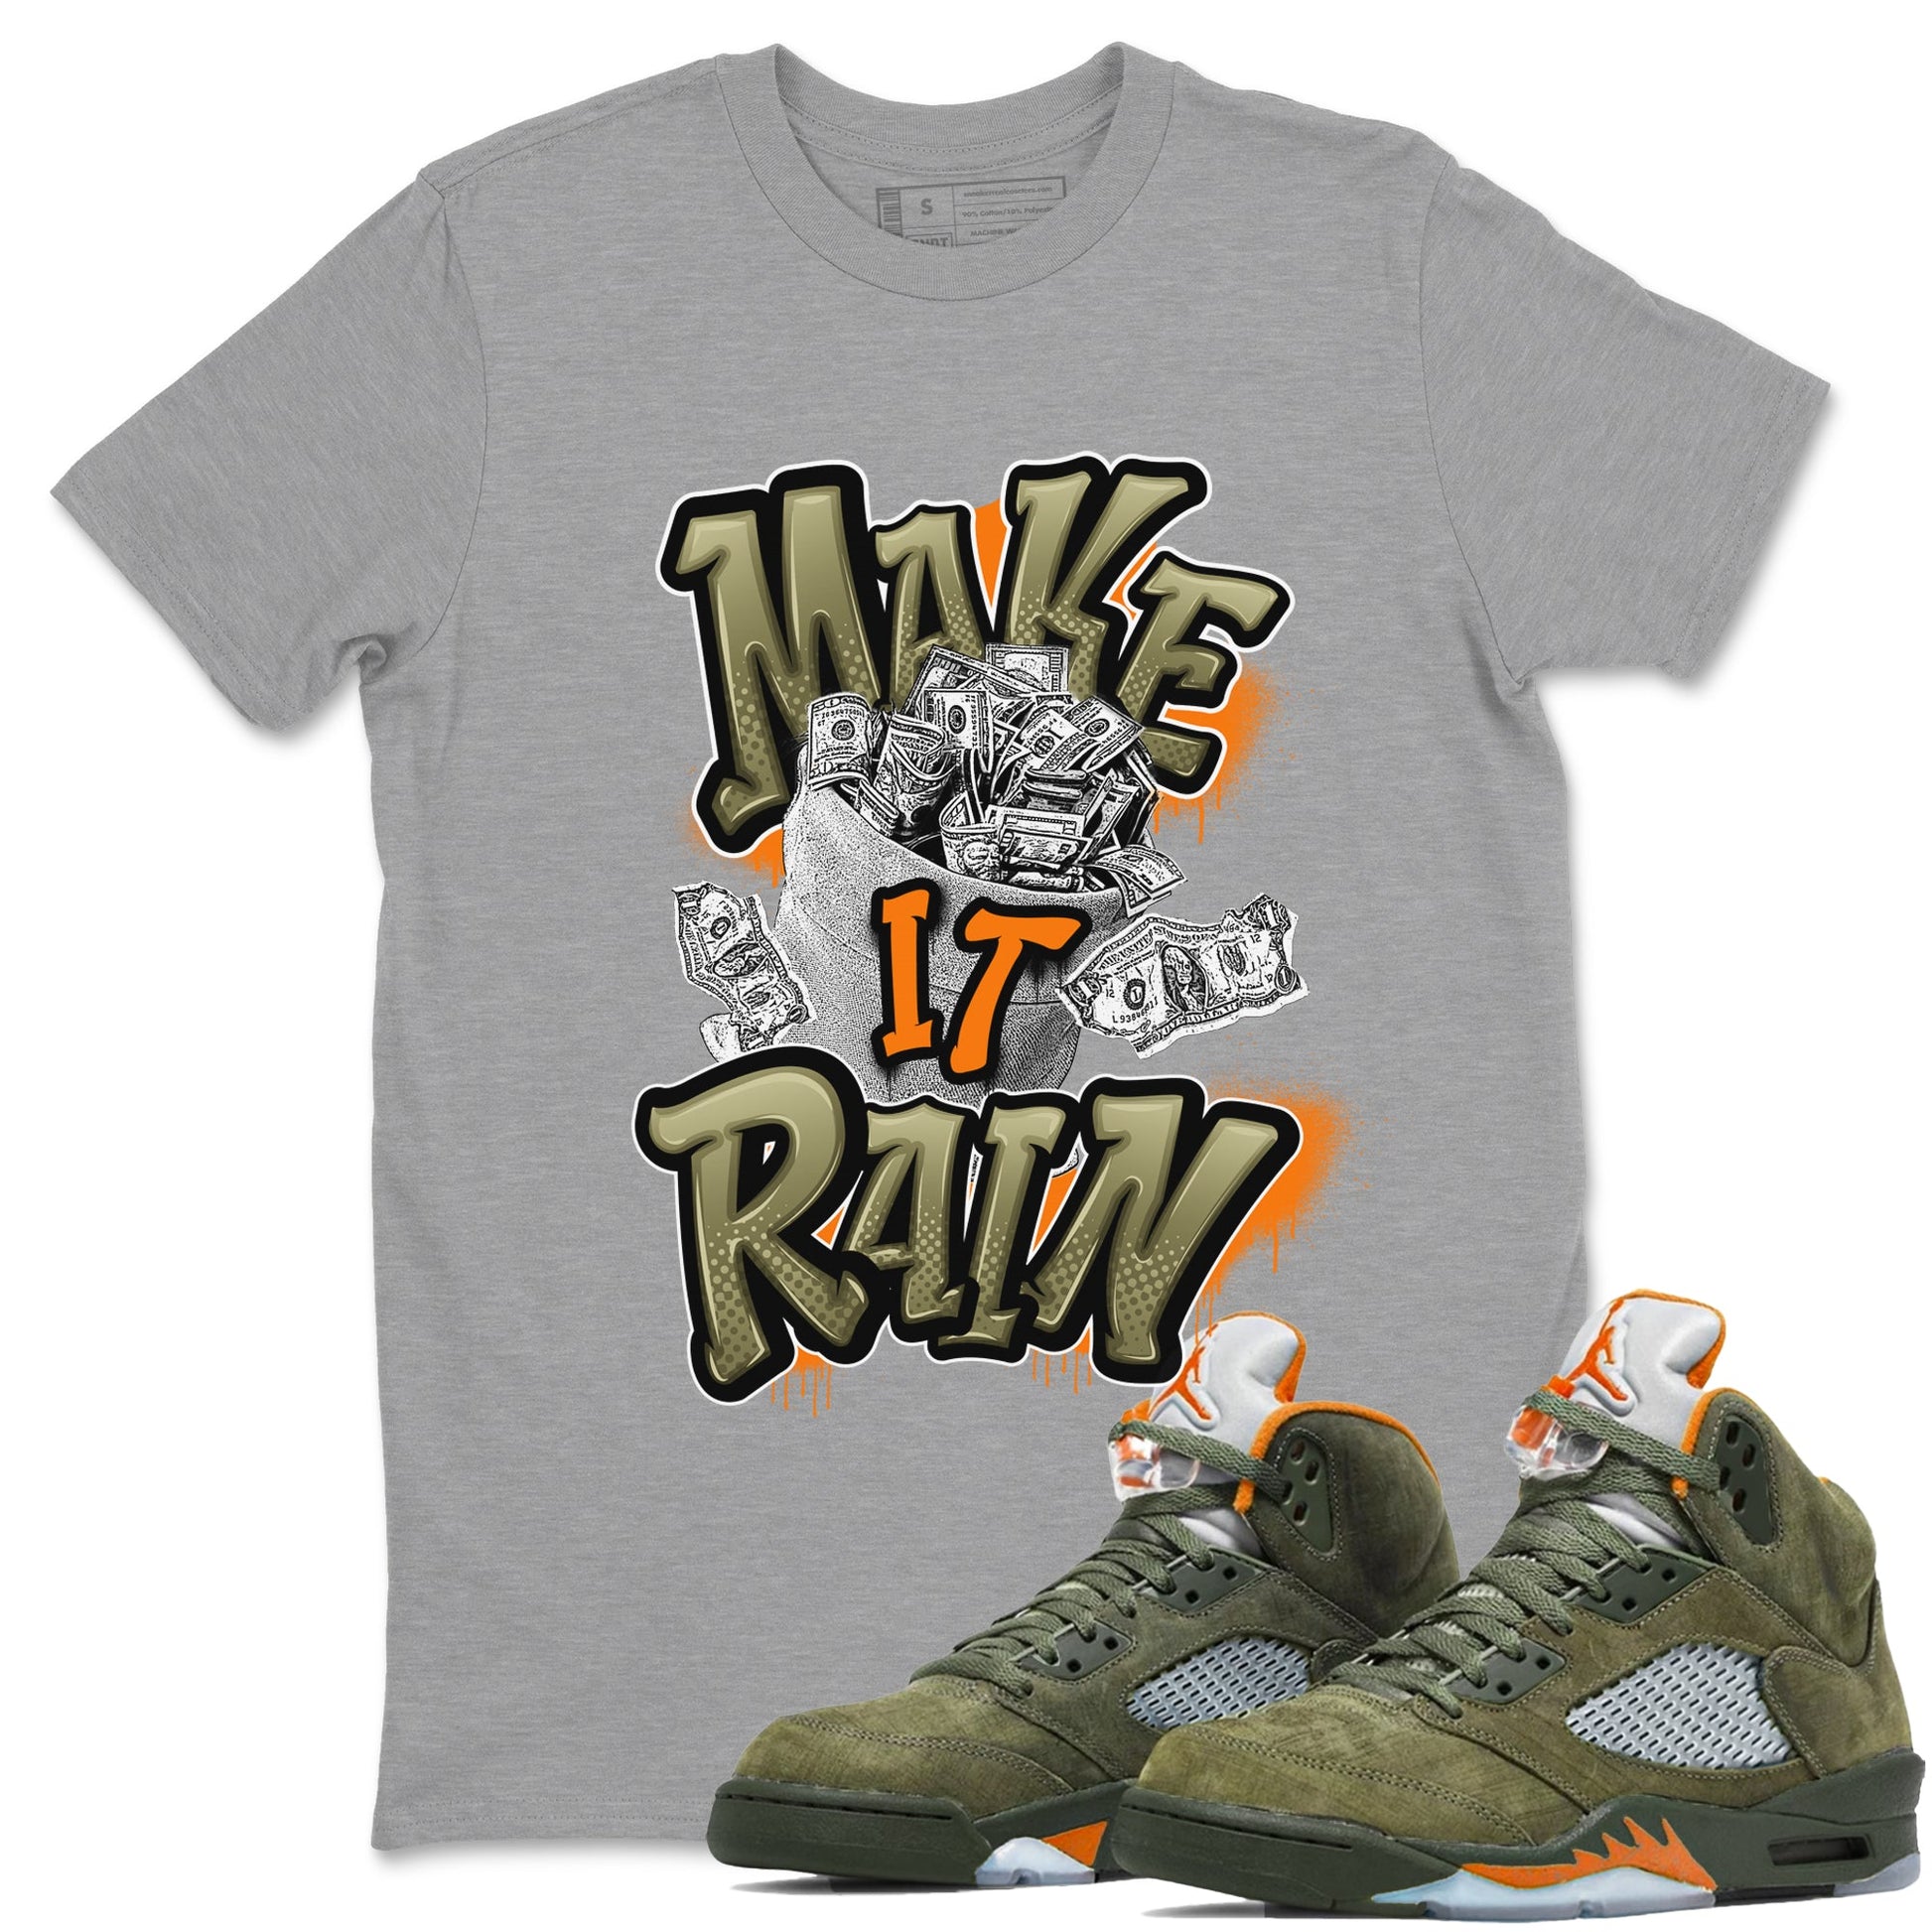 5s Olive shirt to match jordans Make It Rain sneaker tees Air Jordan 5 Olive SNRT Sneaker Release Tees unisex cotton Heather Grey 1 crew neck shirt